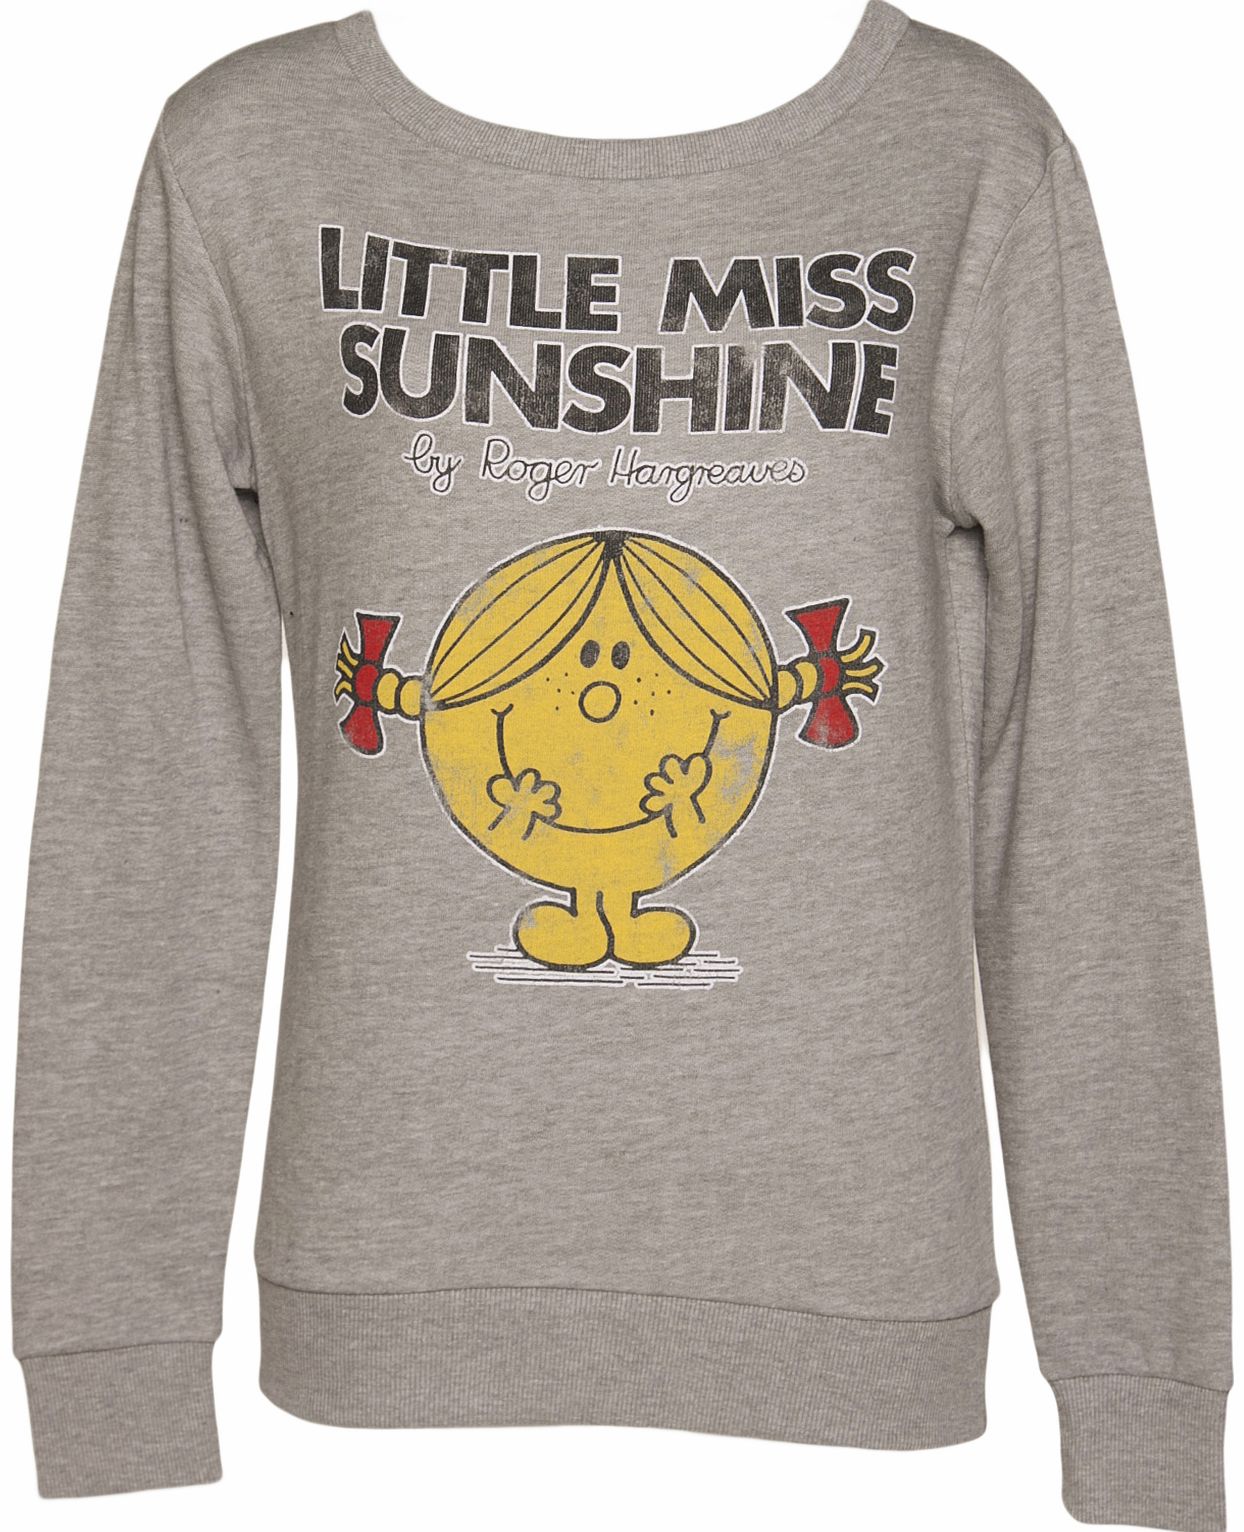 Ladies Little Miss Sunshine Sweater